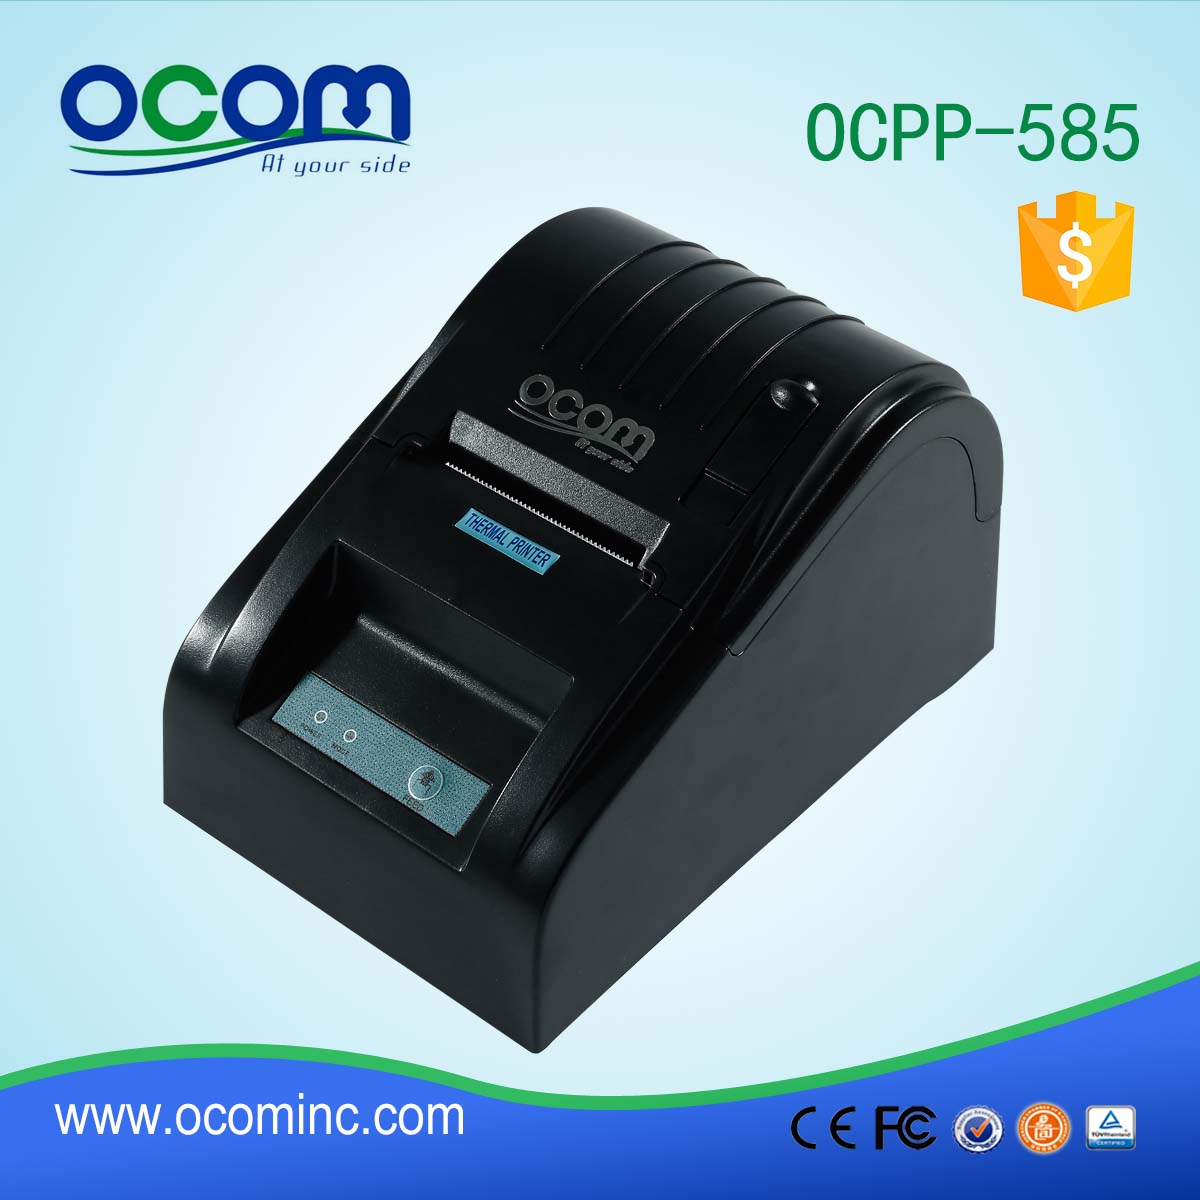 OCPP-586-P Πλάτος χαρτιού χαρτιού 58 mm Εκτύπωση POS Θερμικός εκτυπωτής για μετρητά